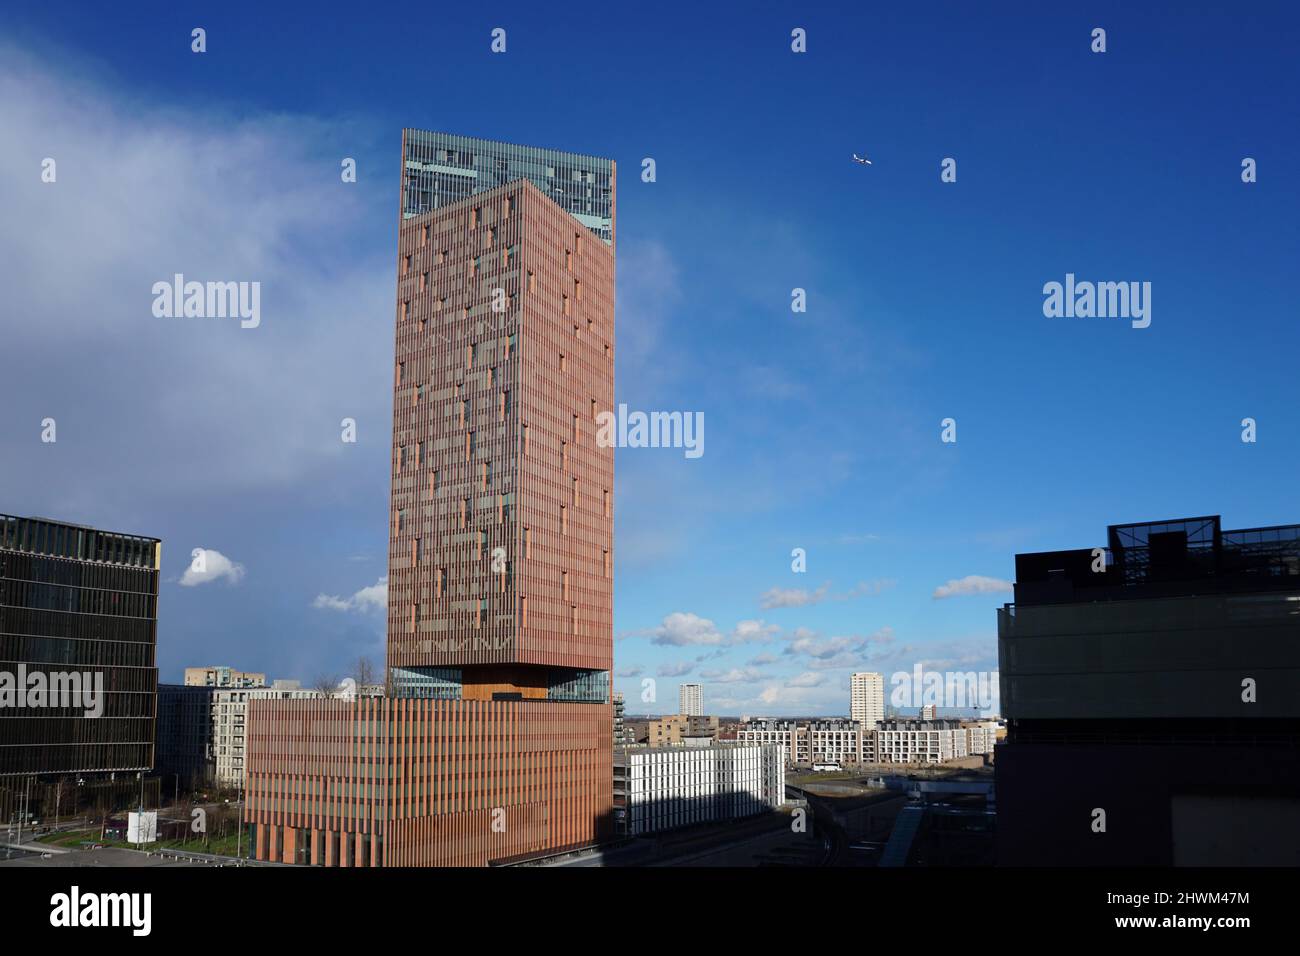 Europe, UK, England, London, Stratford, skyline tower block Stock Photo